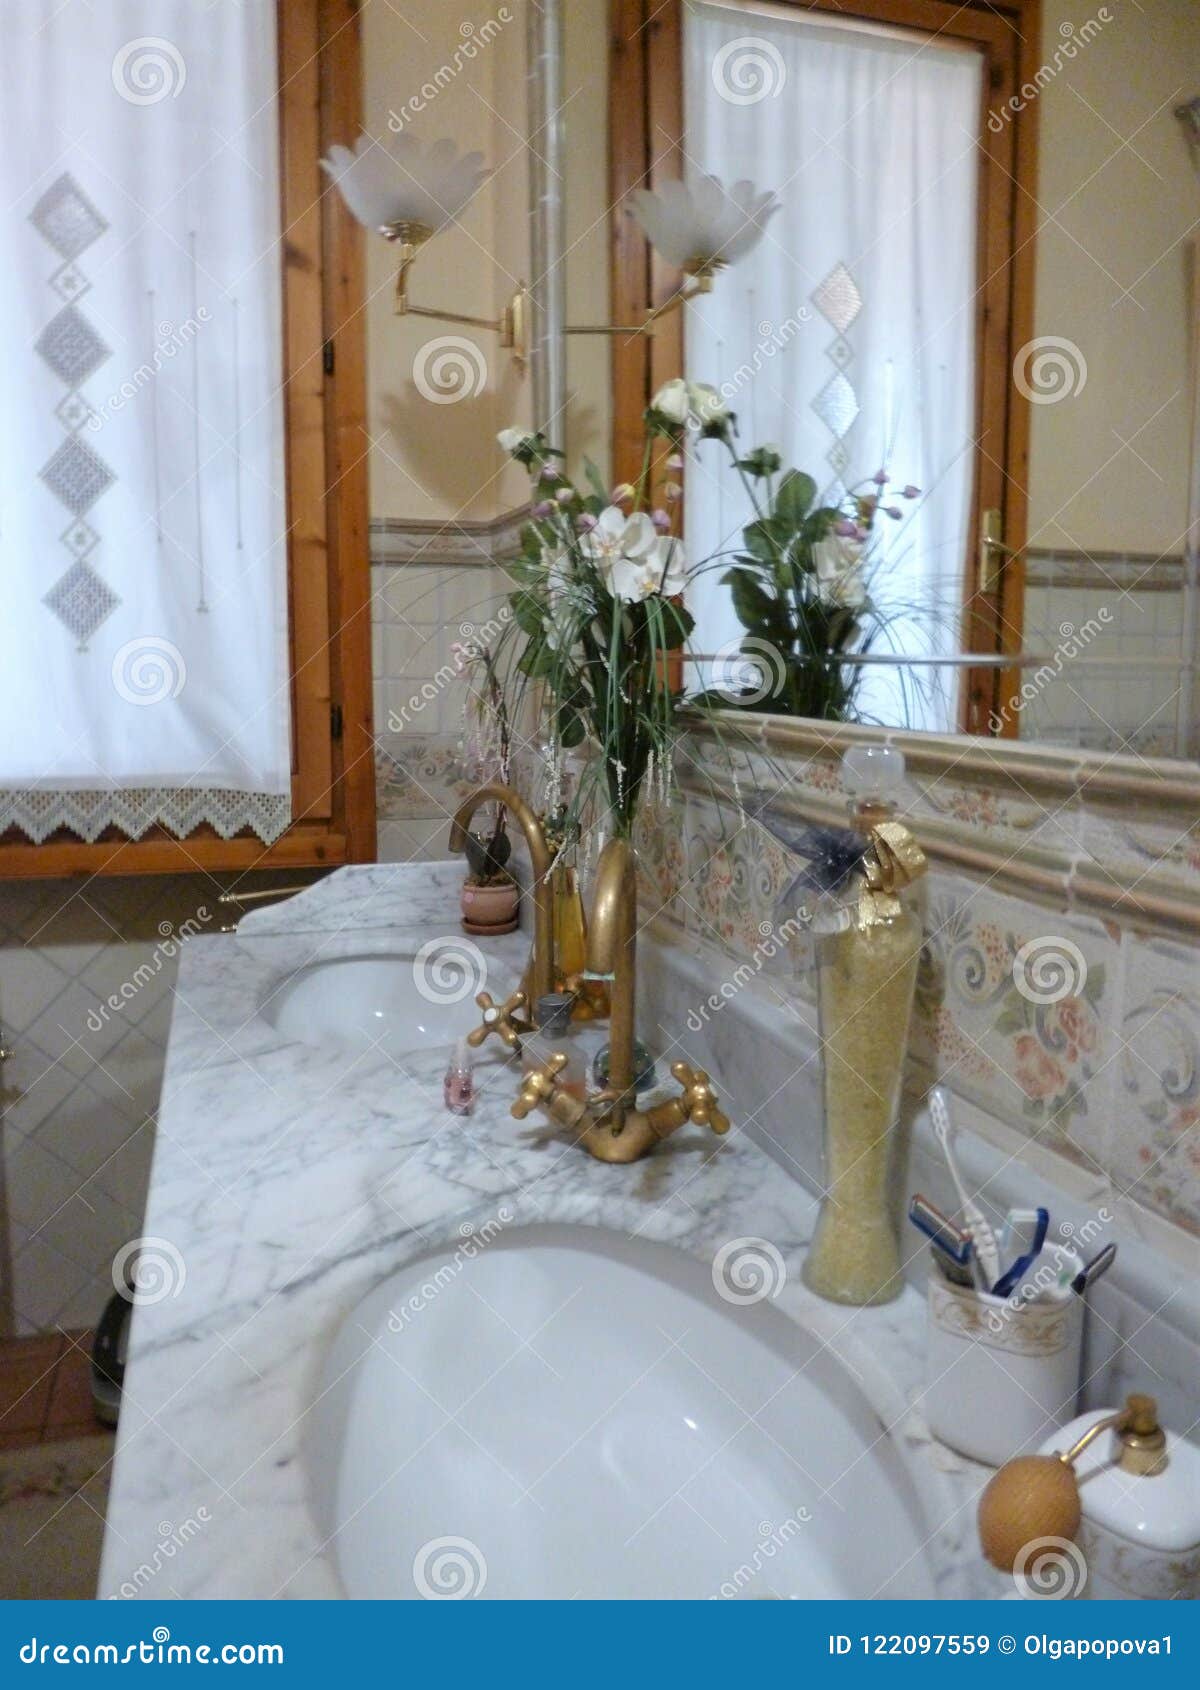 Итальянская Ванная Комната Фото